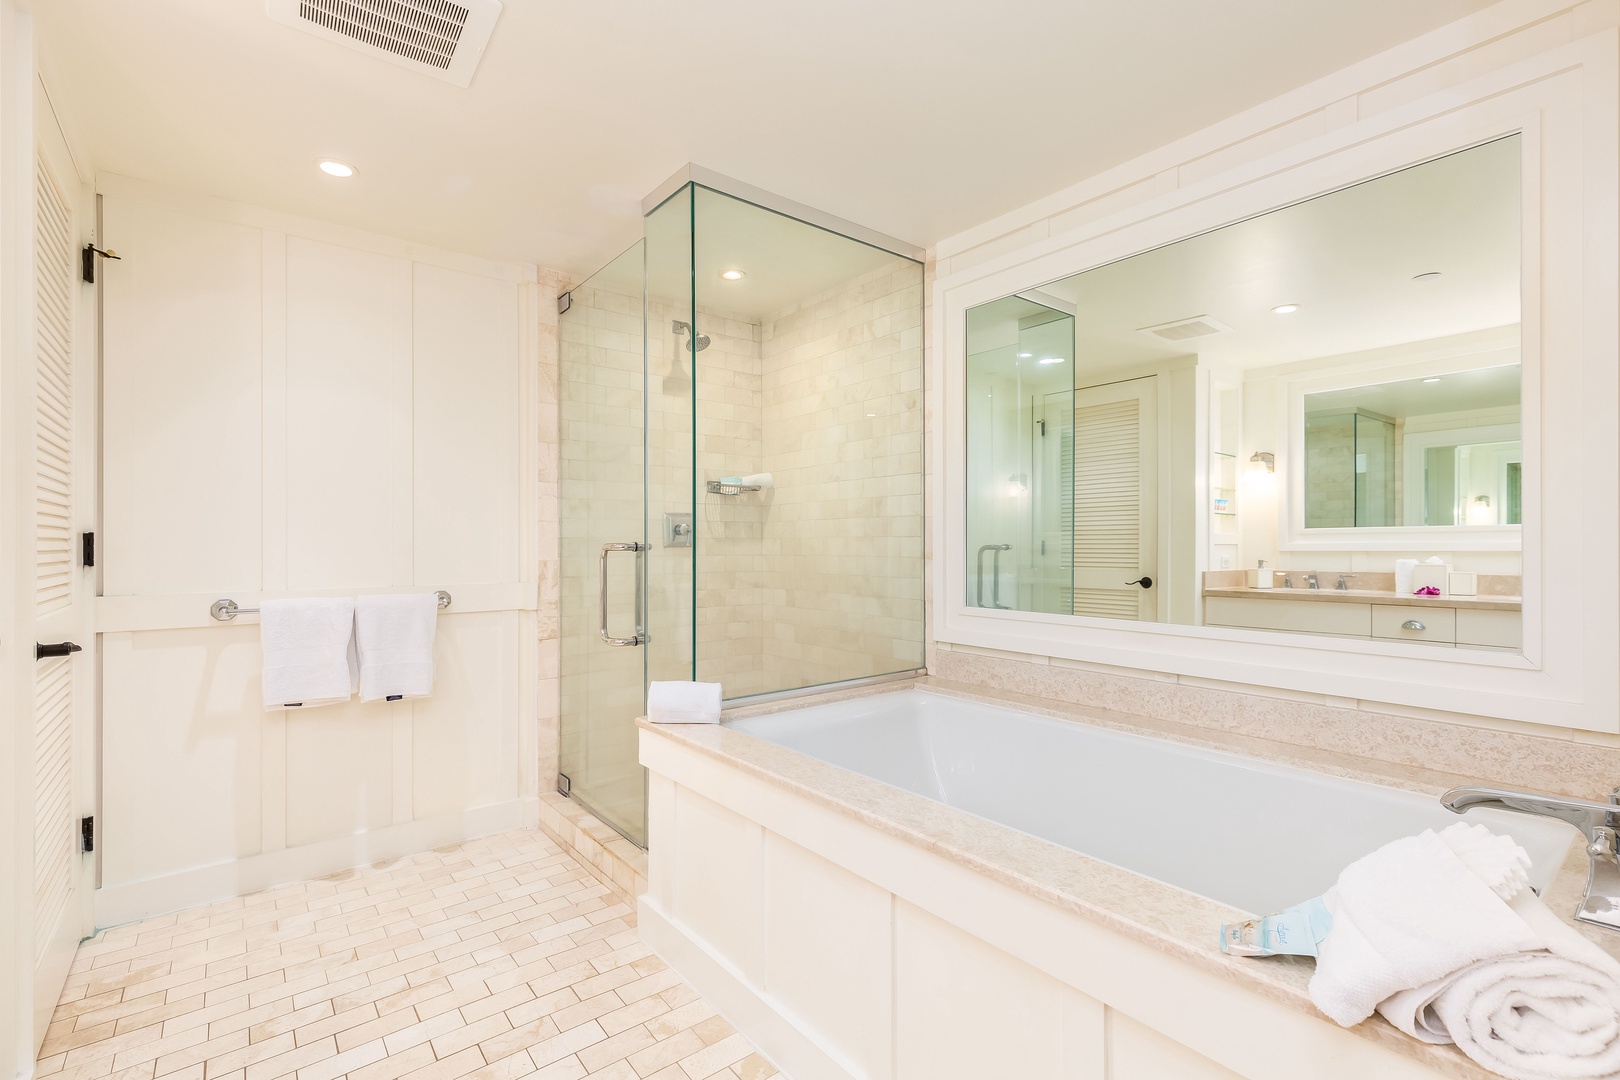 Kahuku Vacation Rentals, Turtle Bay Villas 108 - Walk in shower plus soaking tub